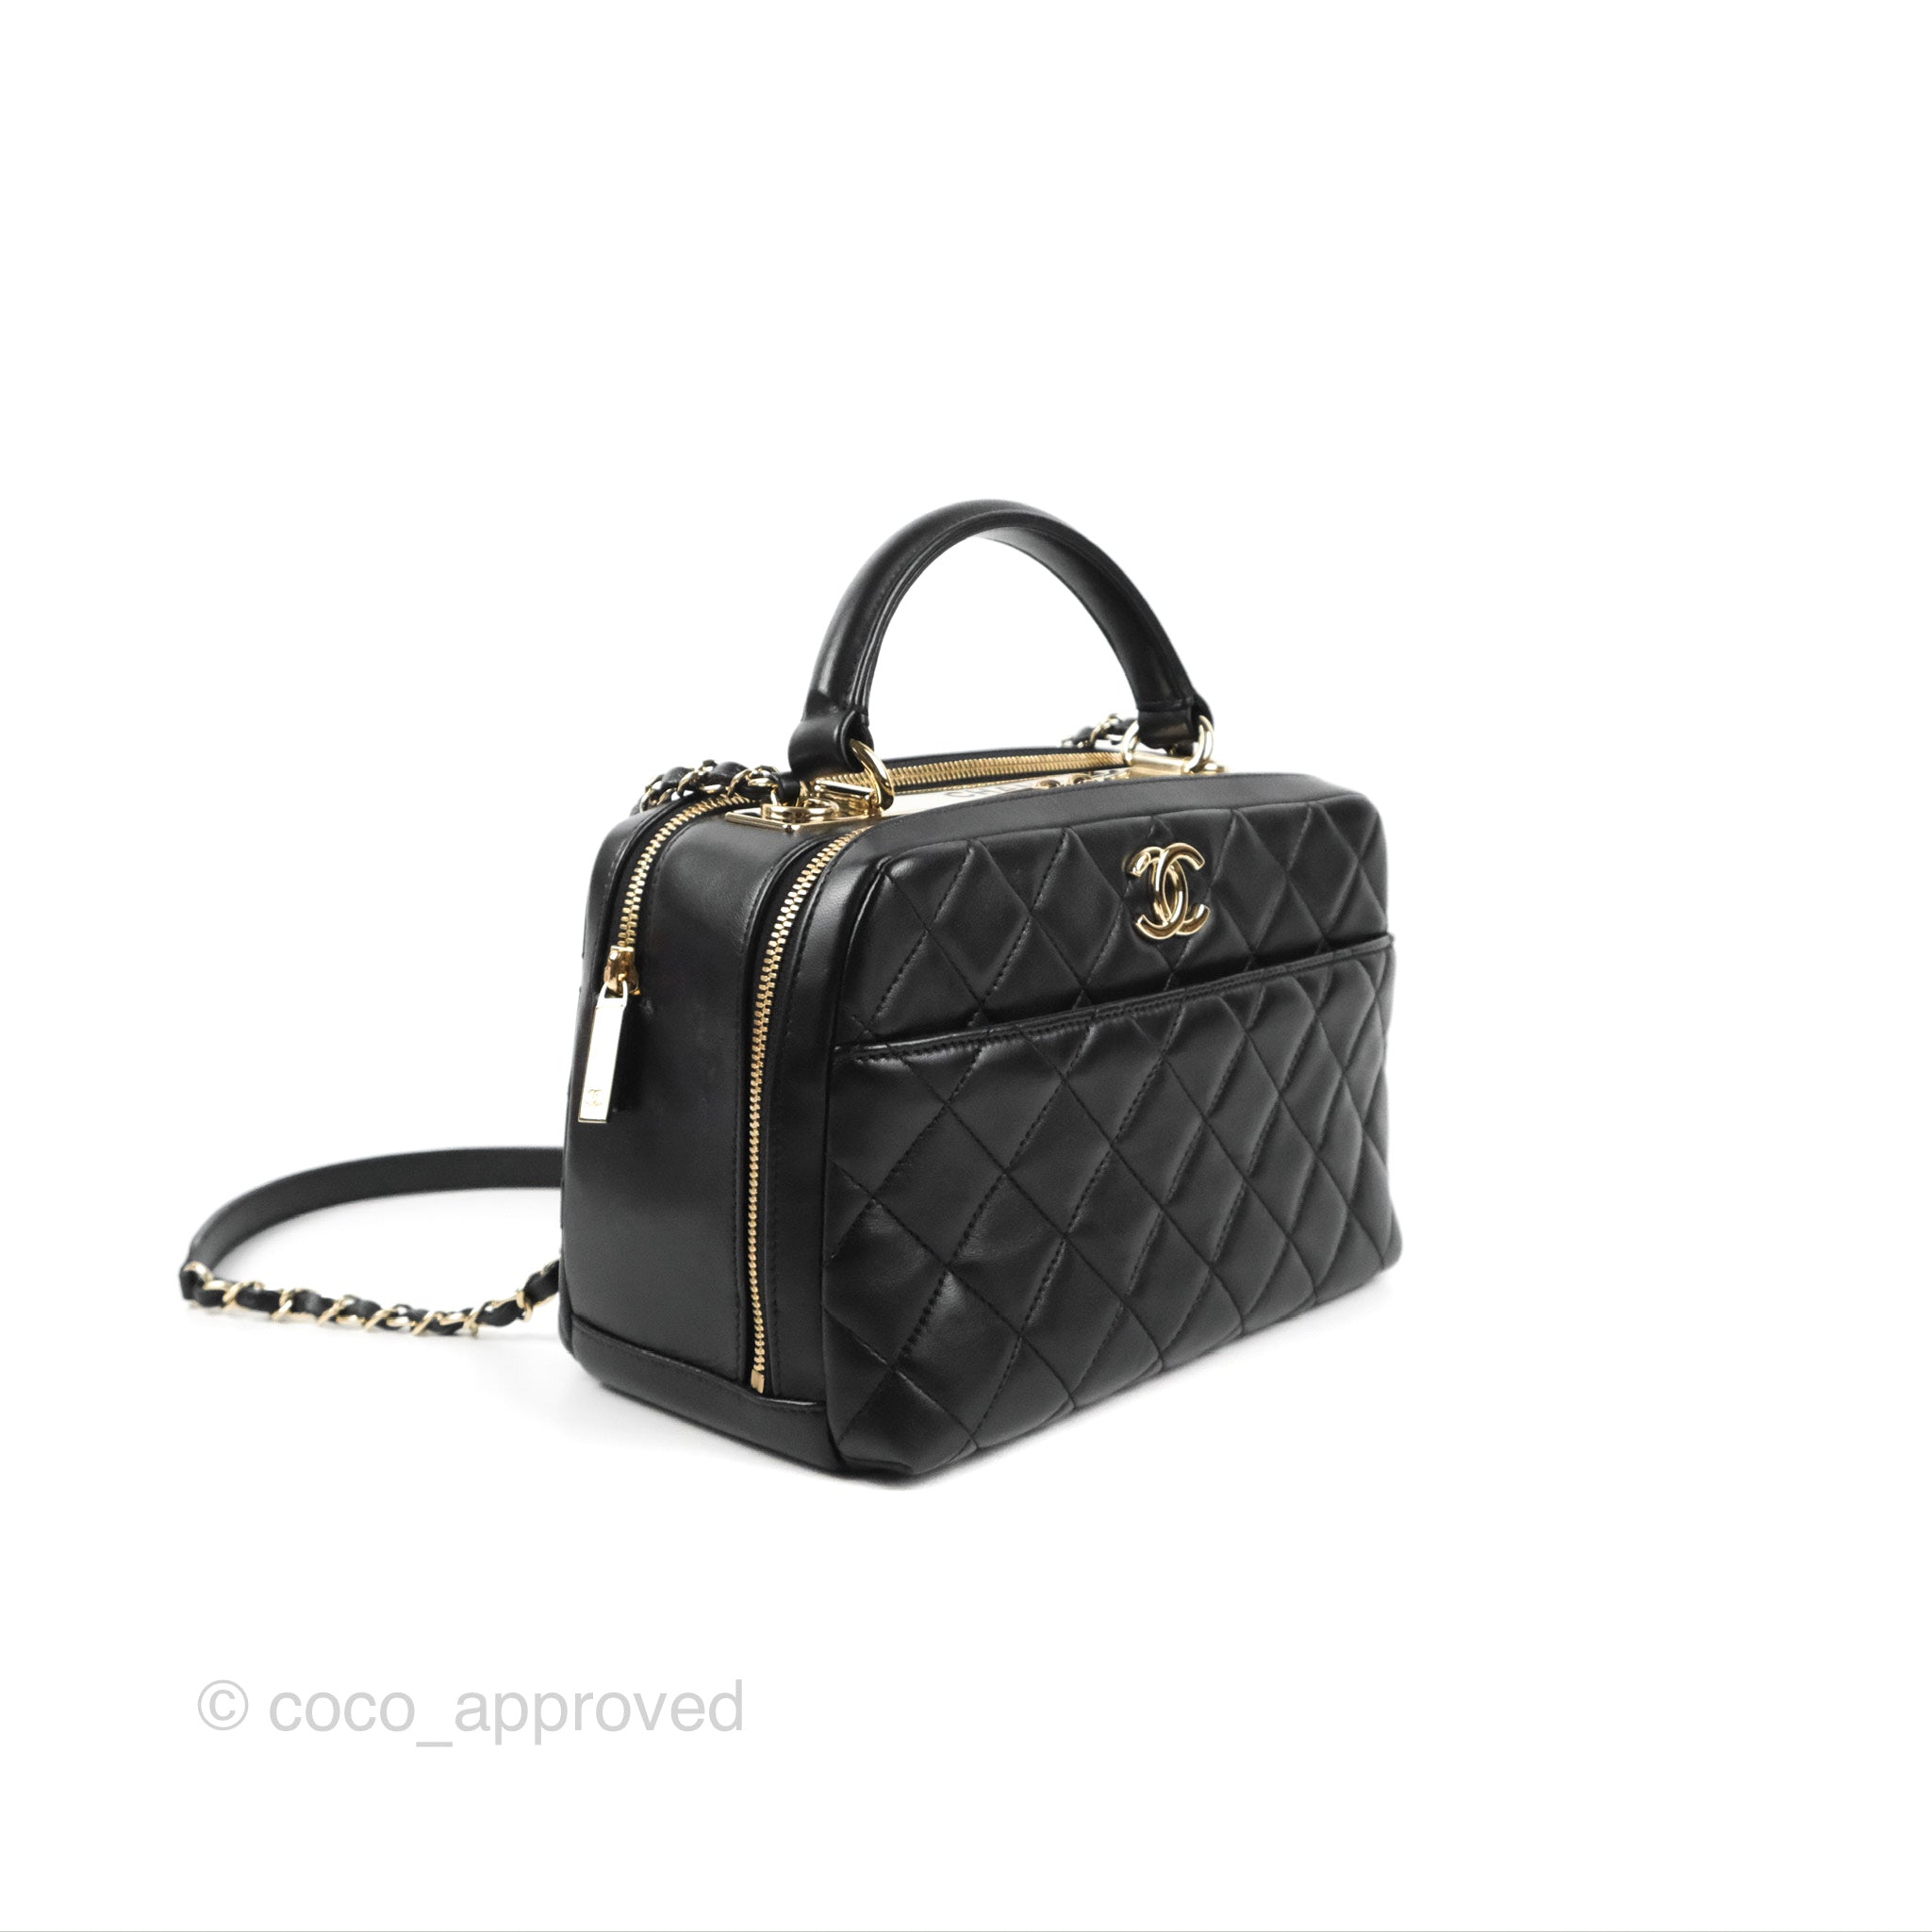 Chanel Bowler Handbags